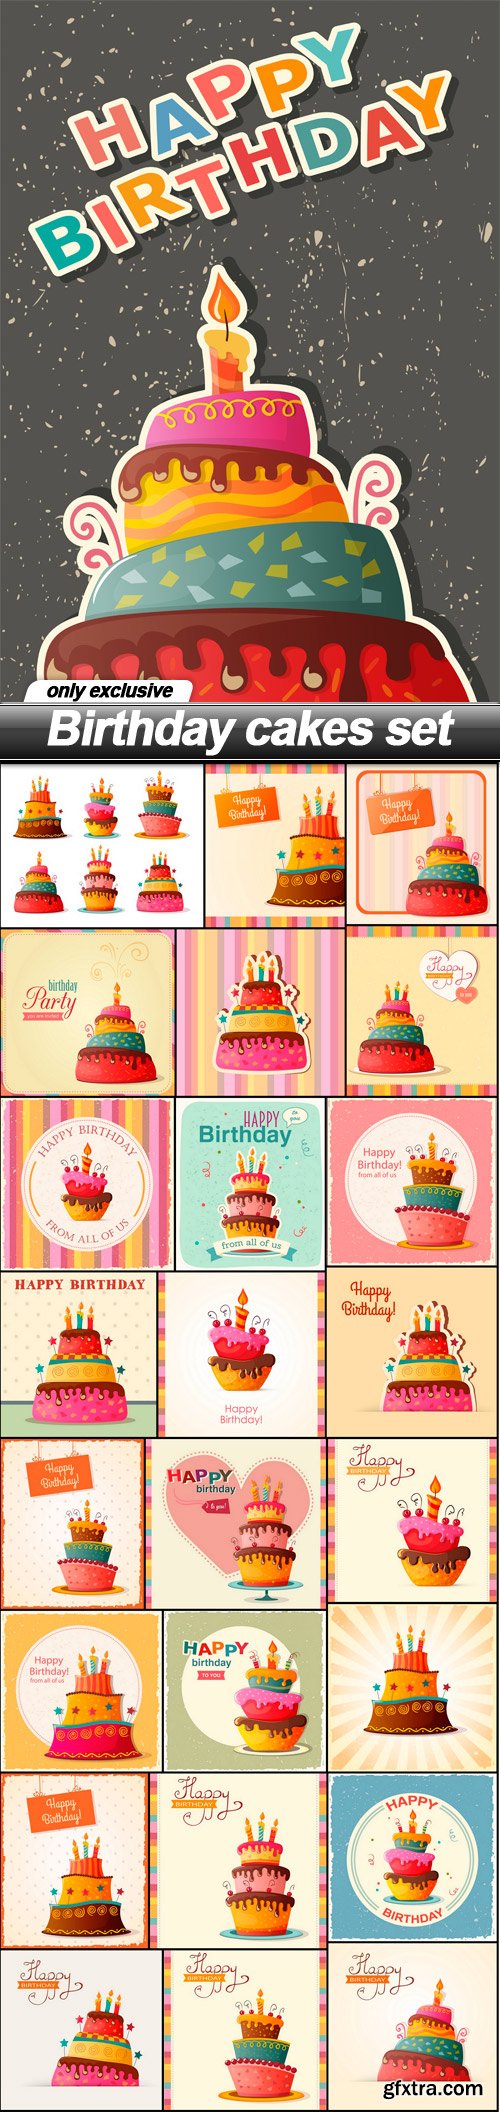 Birthday cakes set - 25 EPS